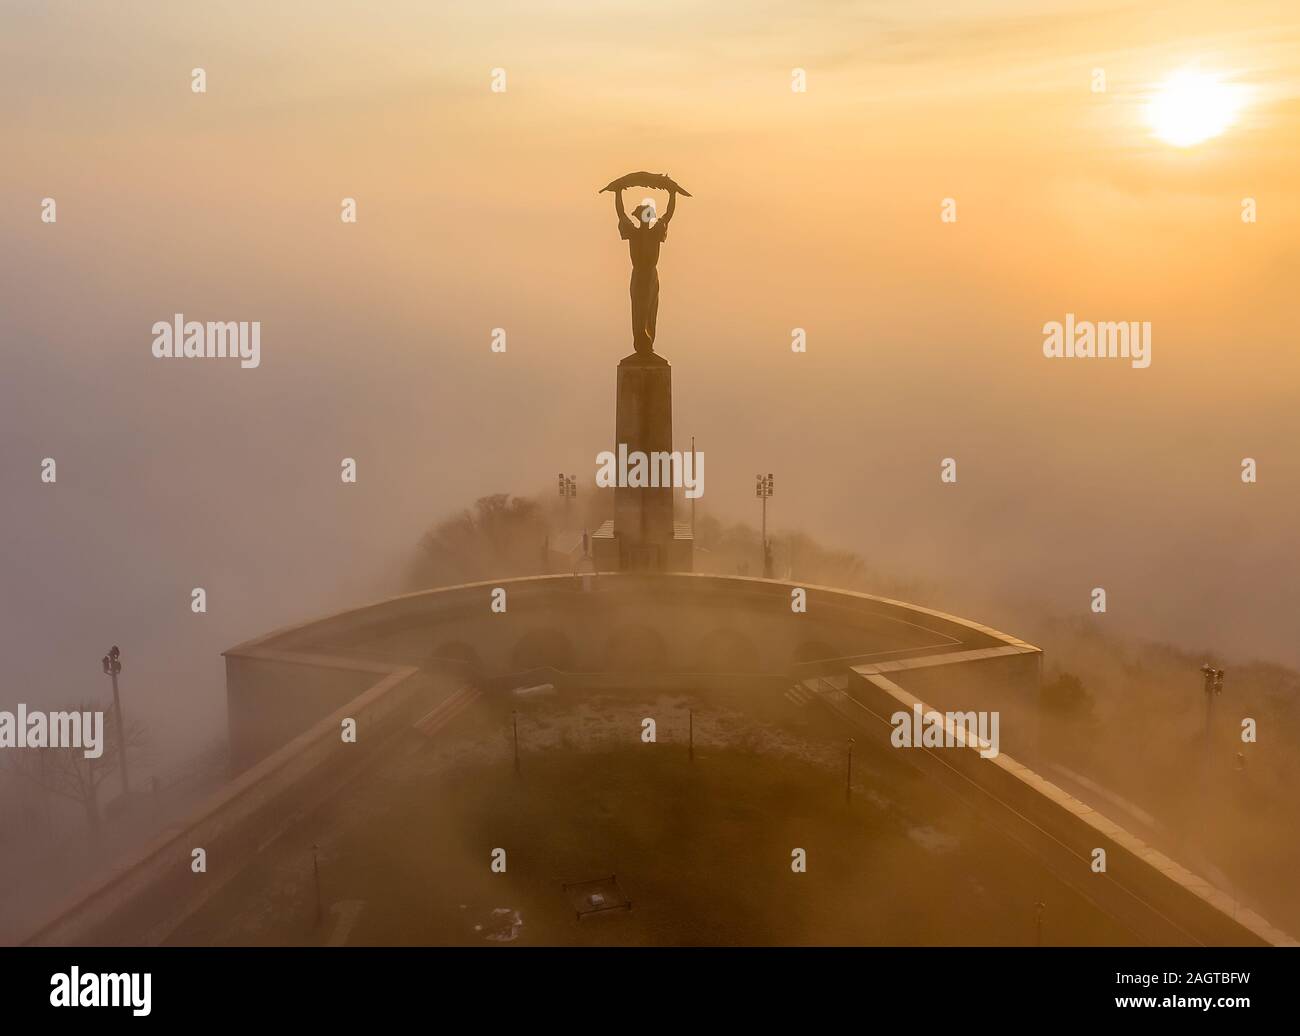 Moody nebligen Morgen in der Zitadelle. Budapest. Ungarn. 2019 Winter. Rising Sun. Nebel. mist. Liberty Bridge. Schlechtes Wetter Stockfoto